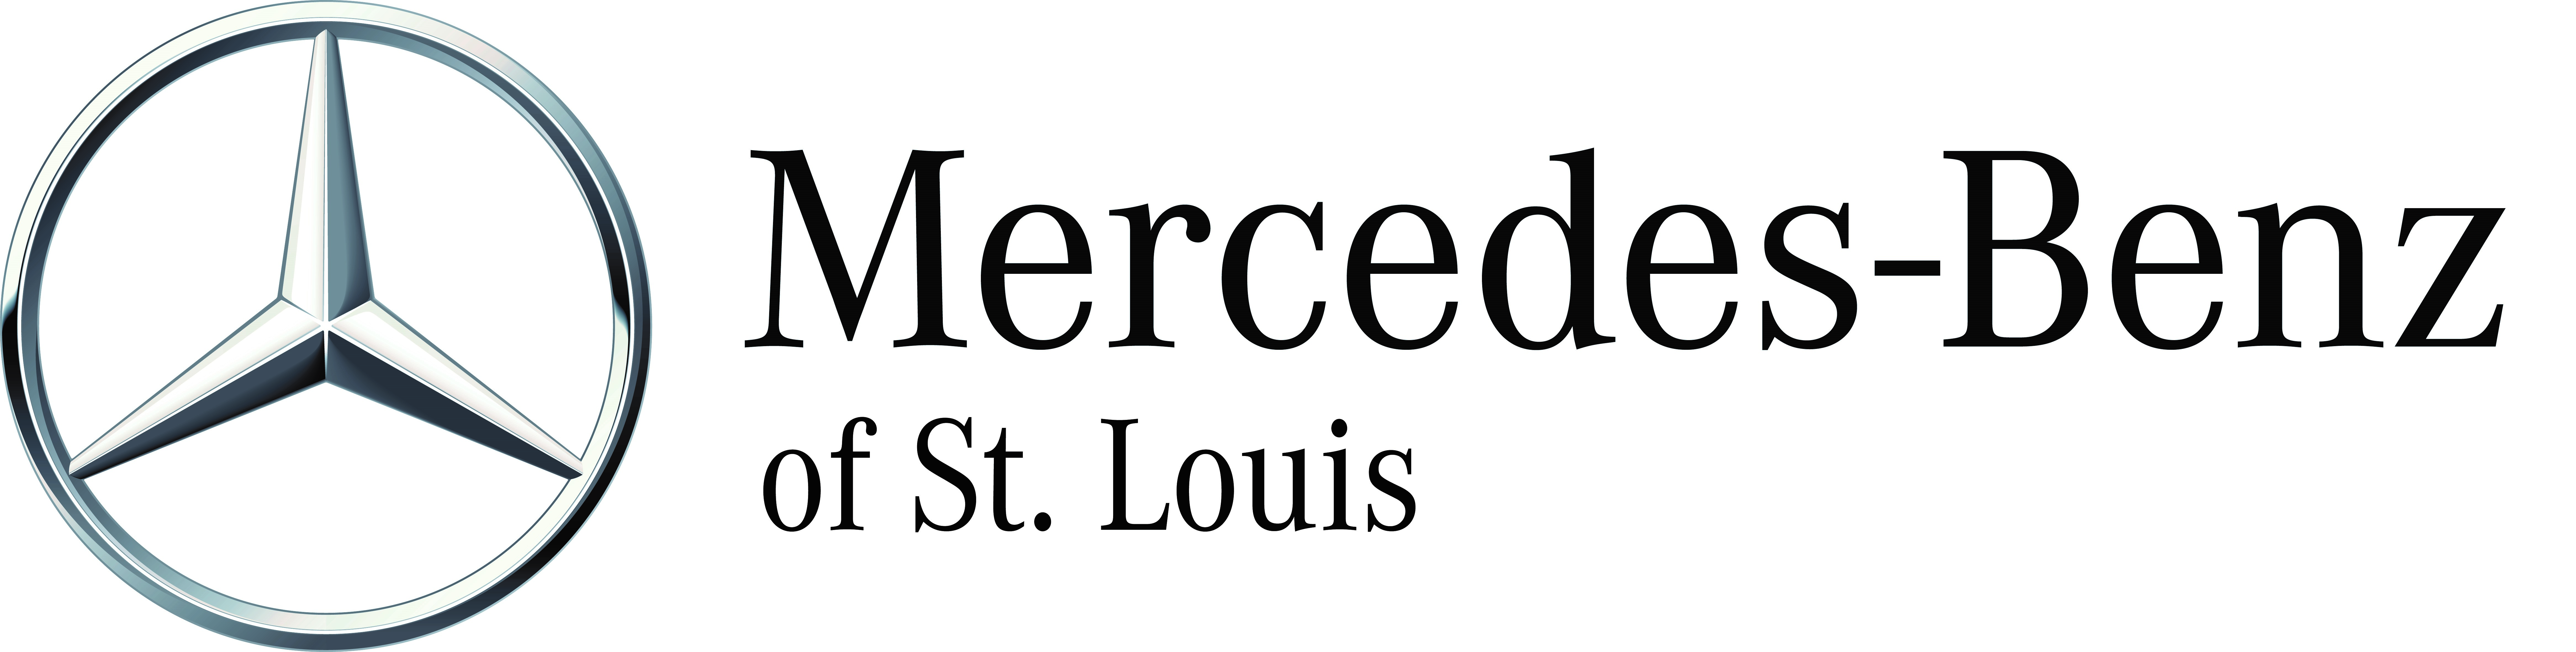 Mercedes-Benz of St. Louis